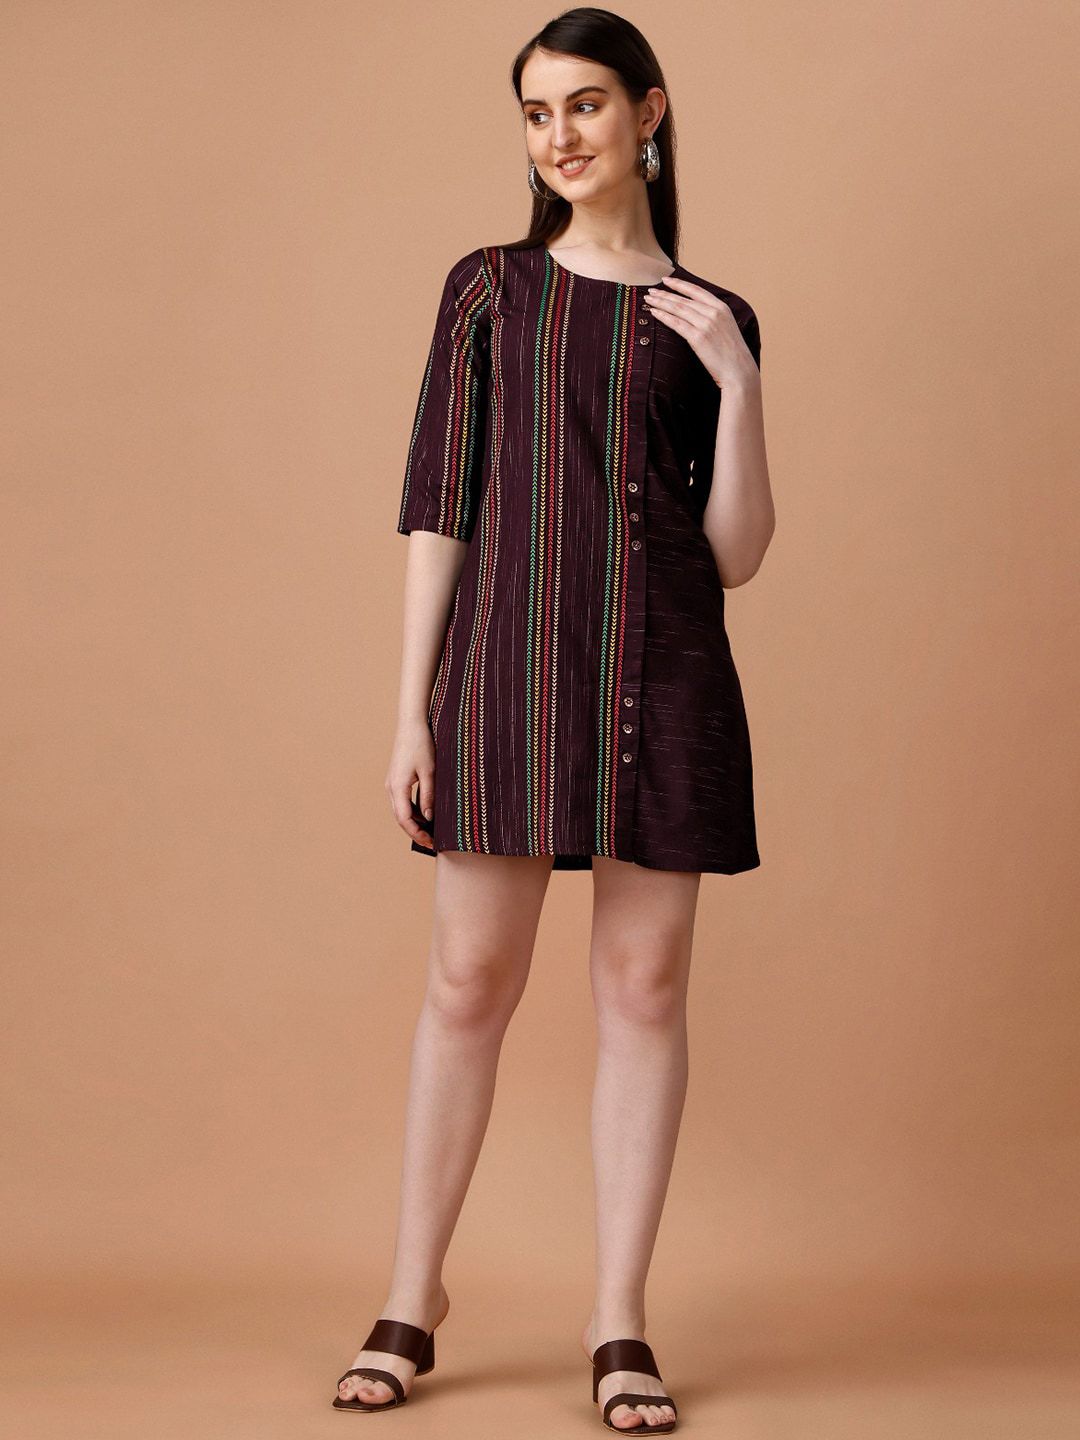 KALINI Striped Cotton A-Line Mini Dress Price in India